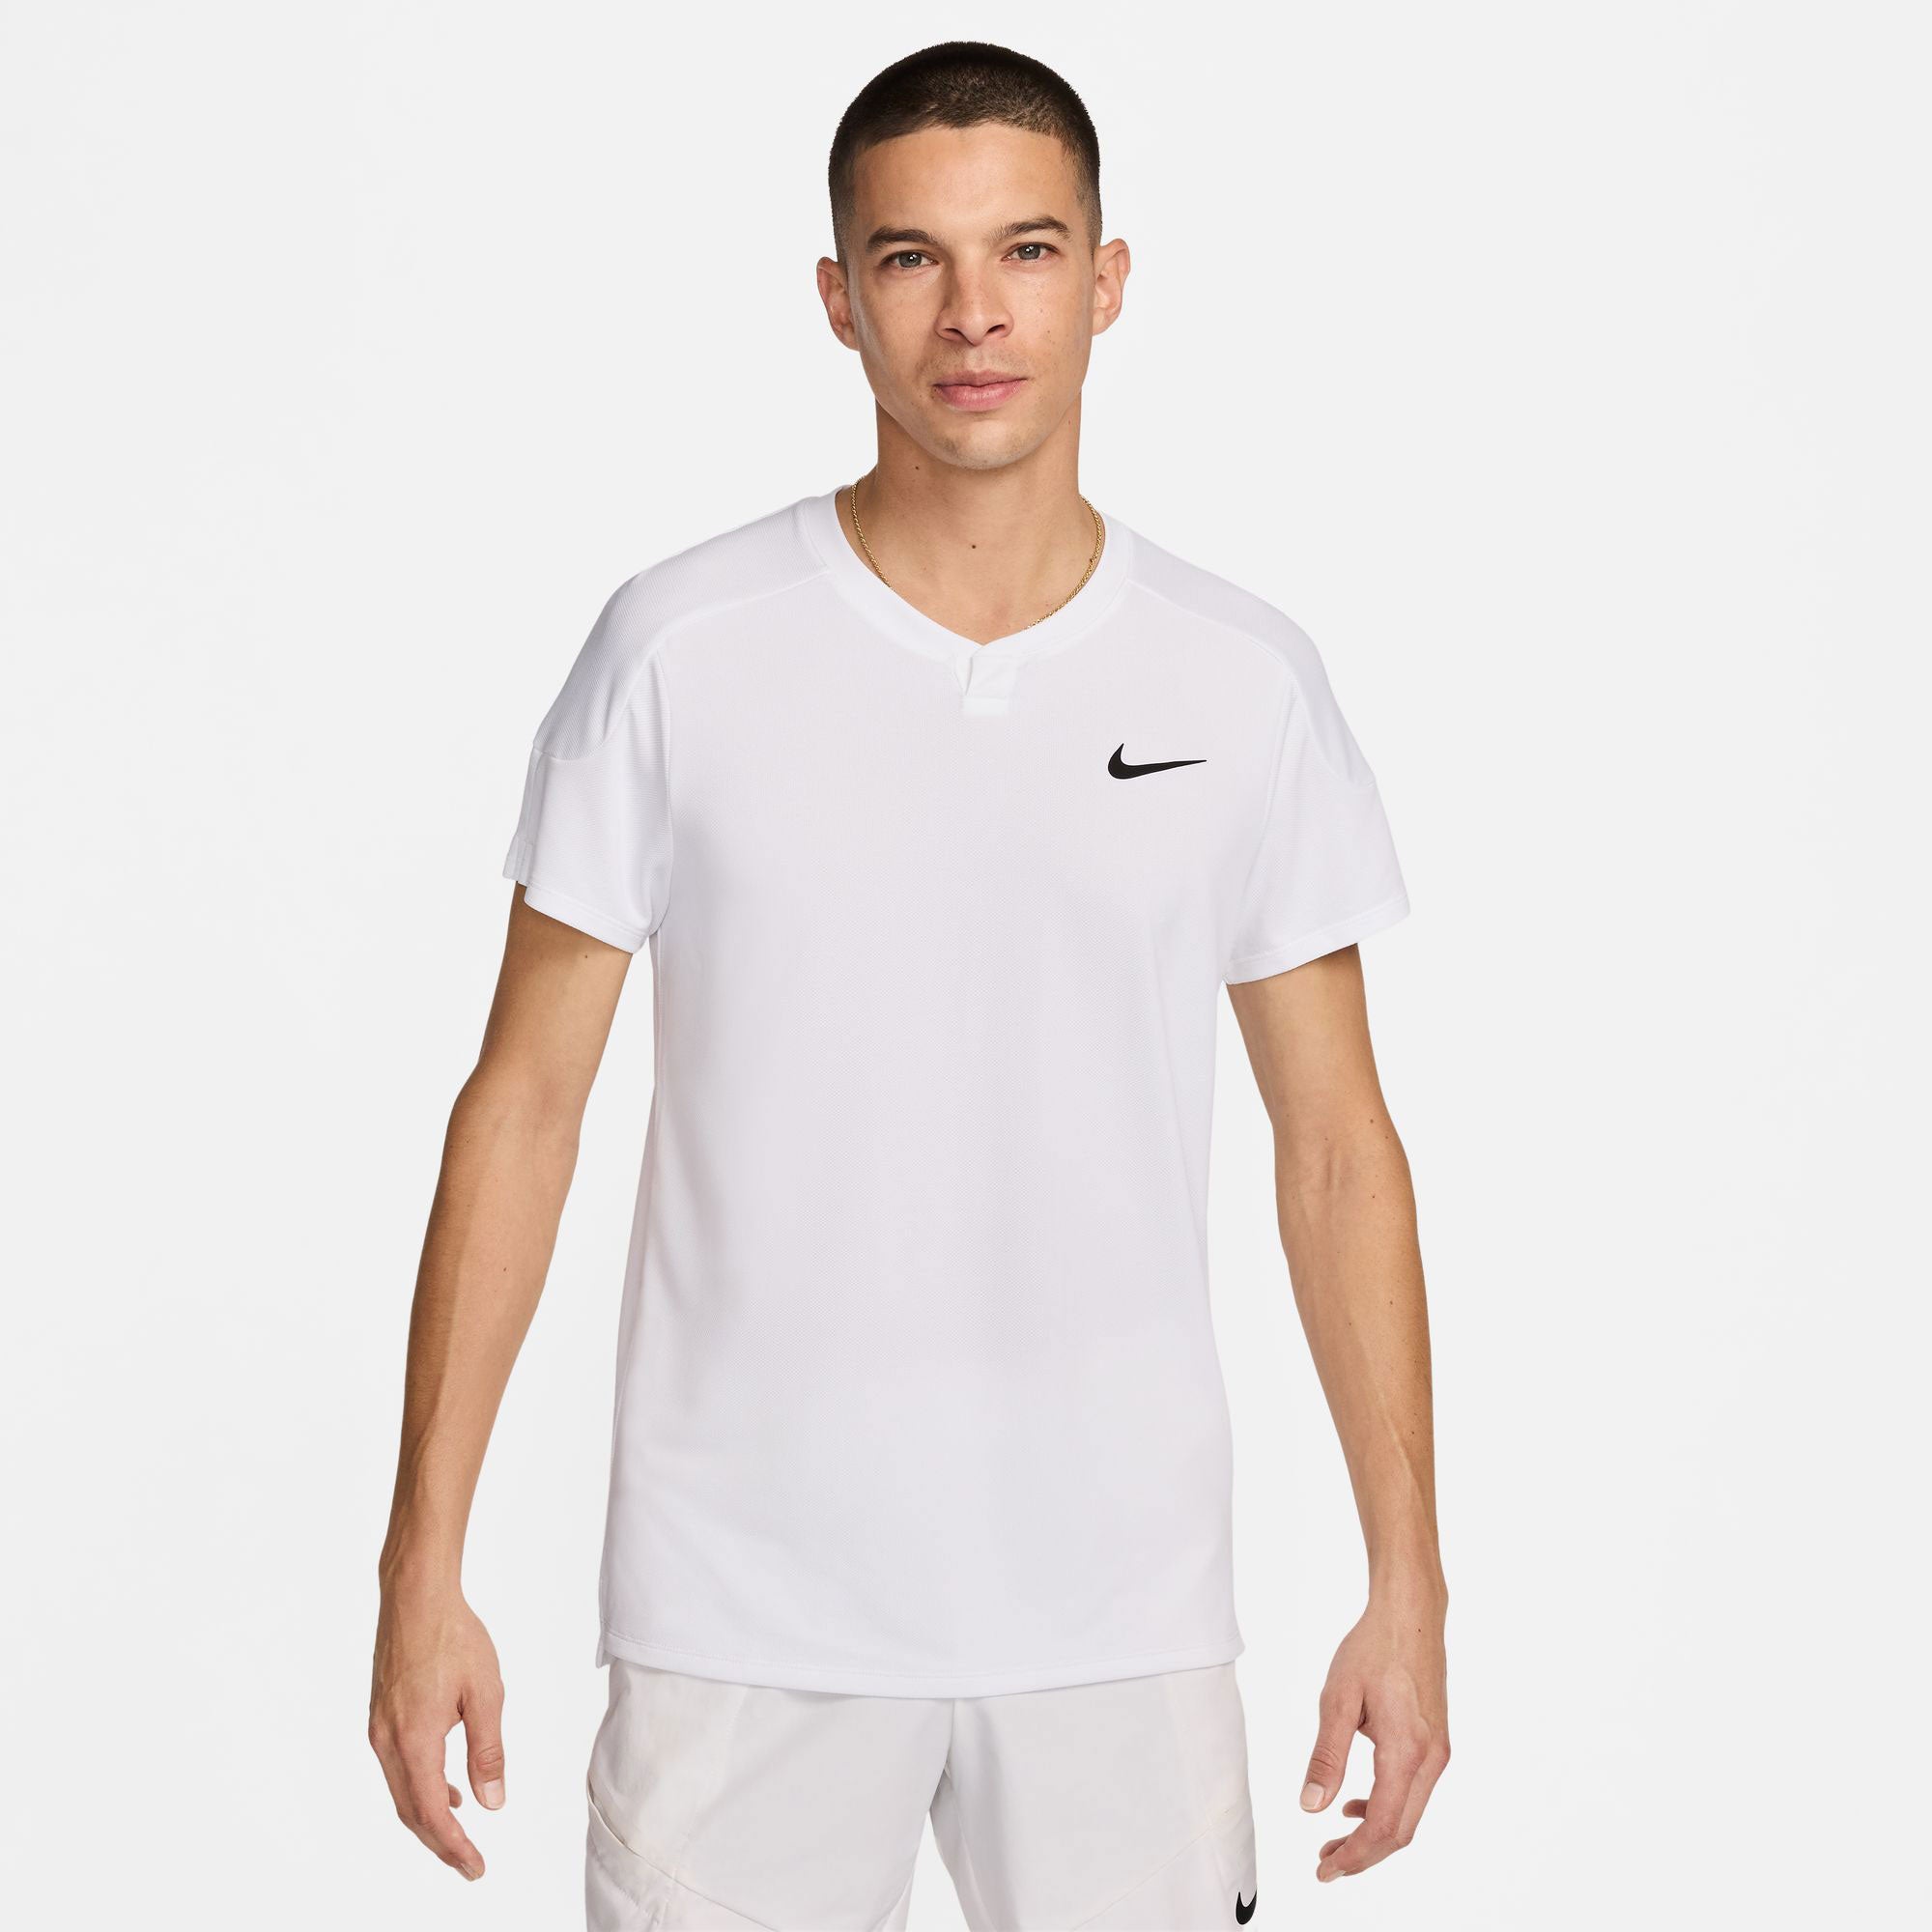 NikeCourt Slam London Men's Dri-FIT Tennis Shirt - White (1)